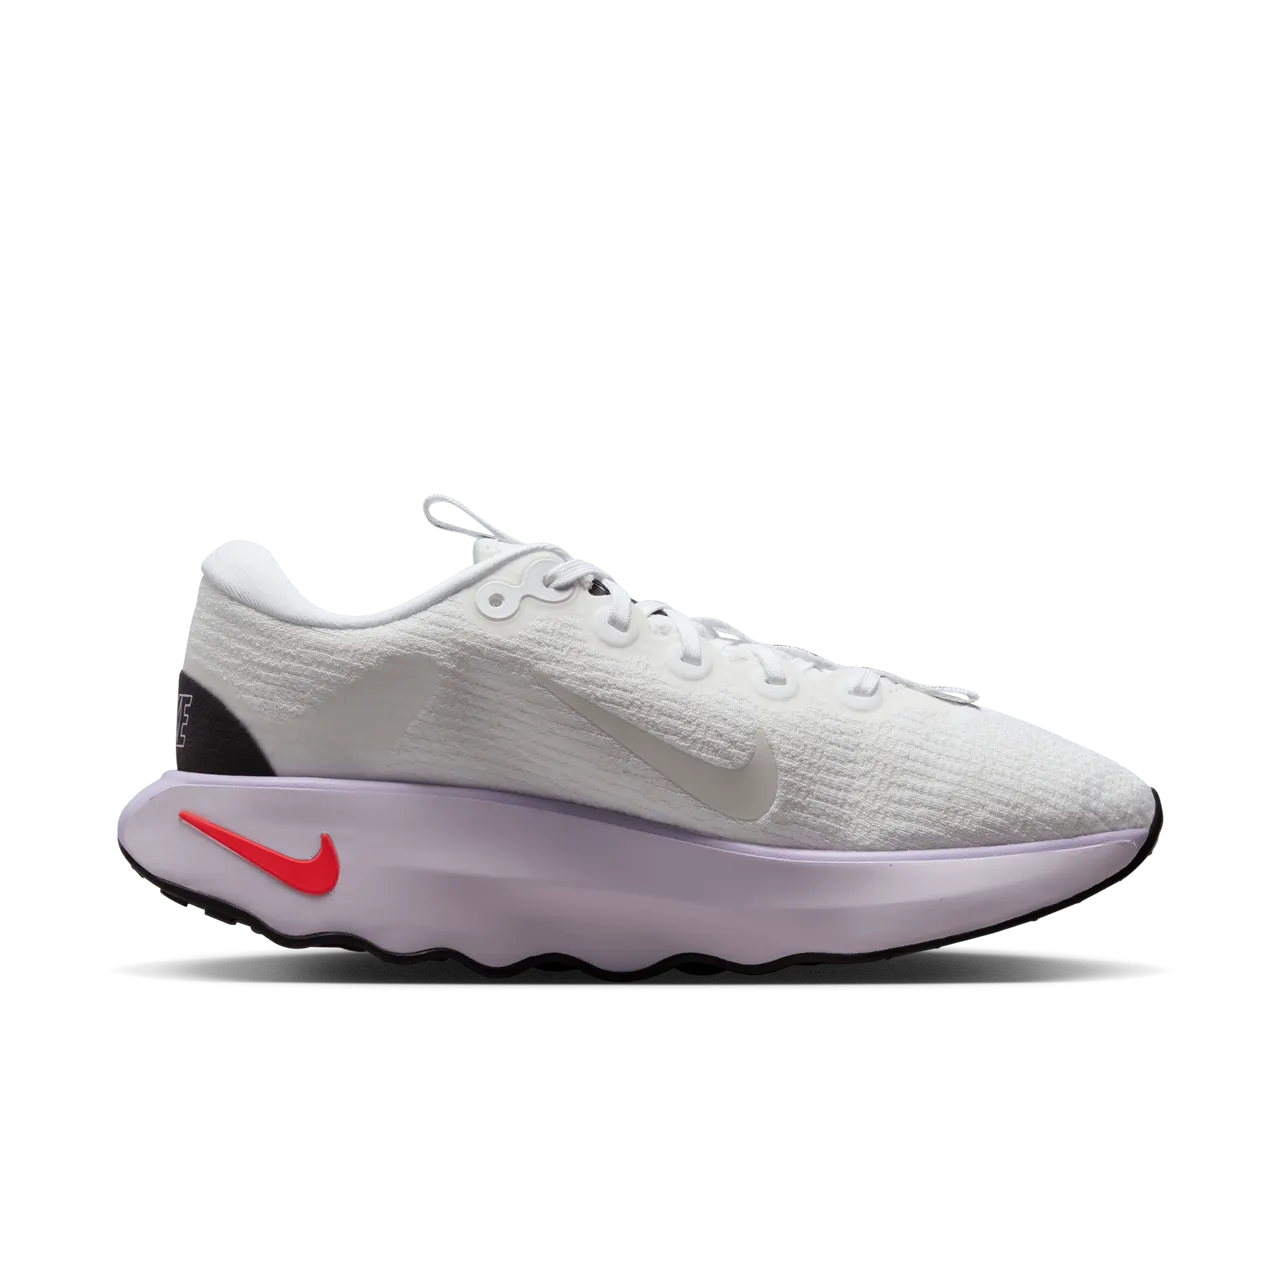 Nike Motiva Women's Walking Shoes - White